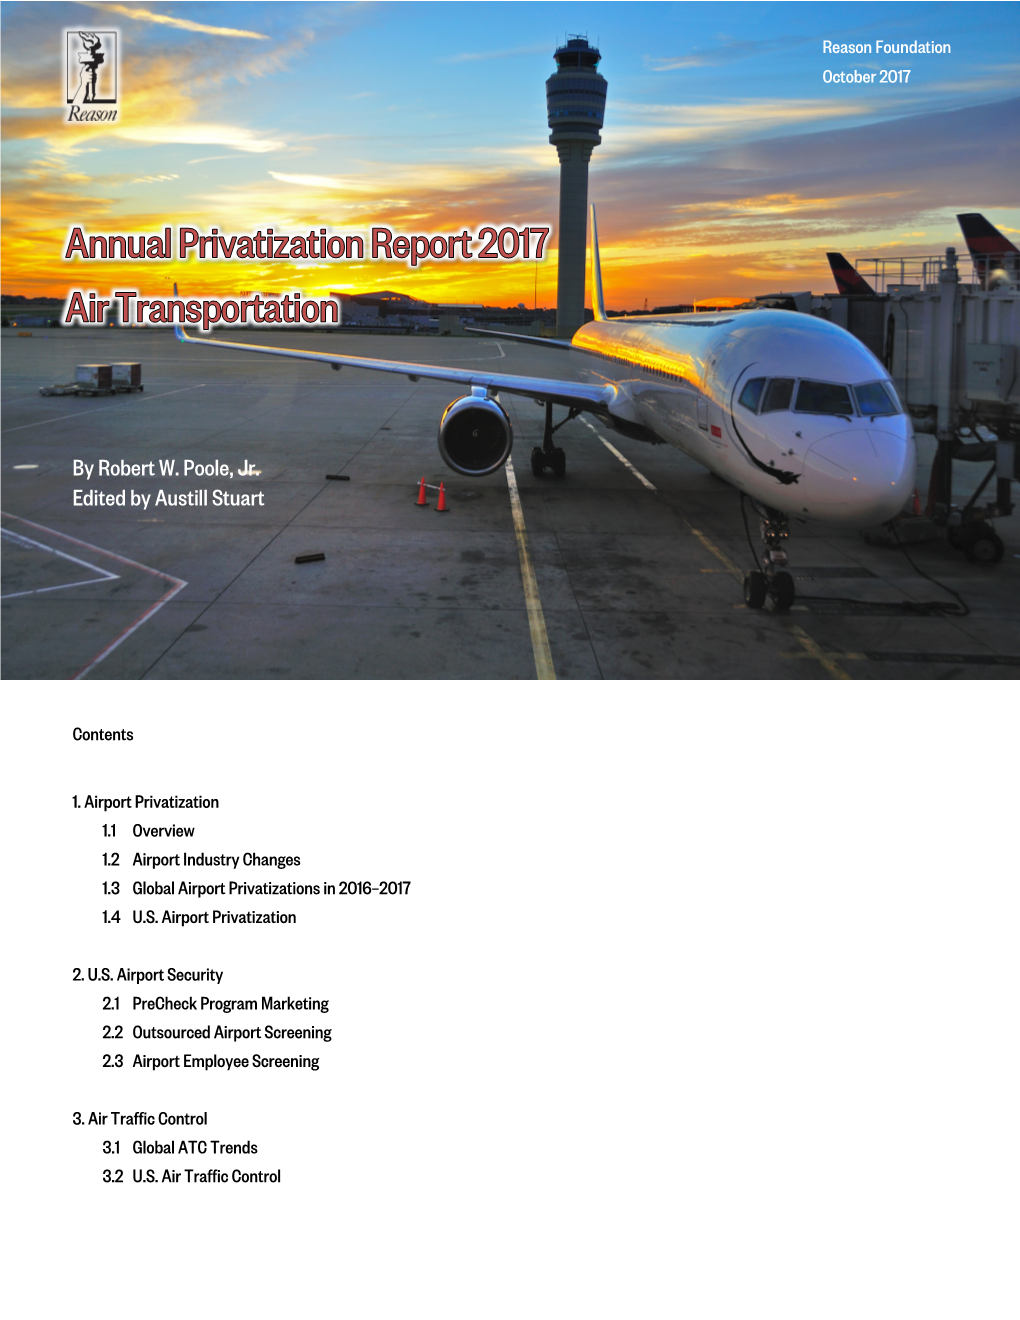 Annual Privatization Report 2017: Air Transportation | 3